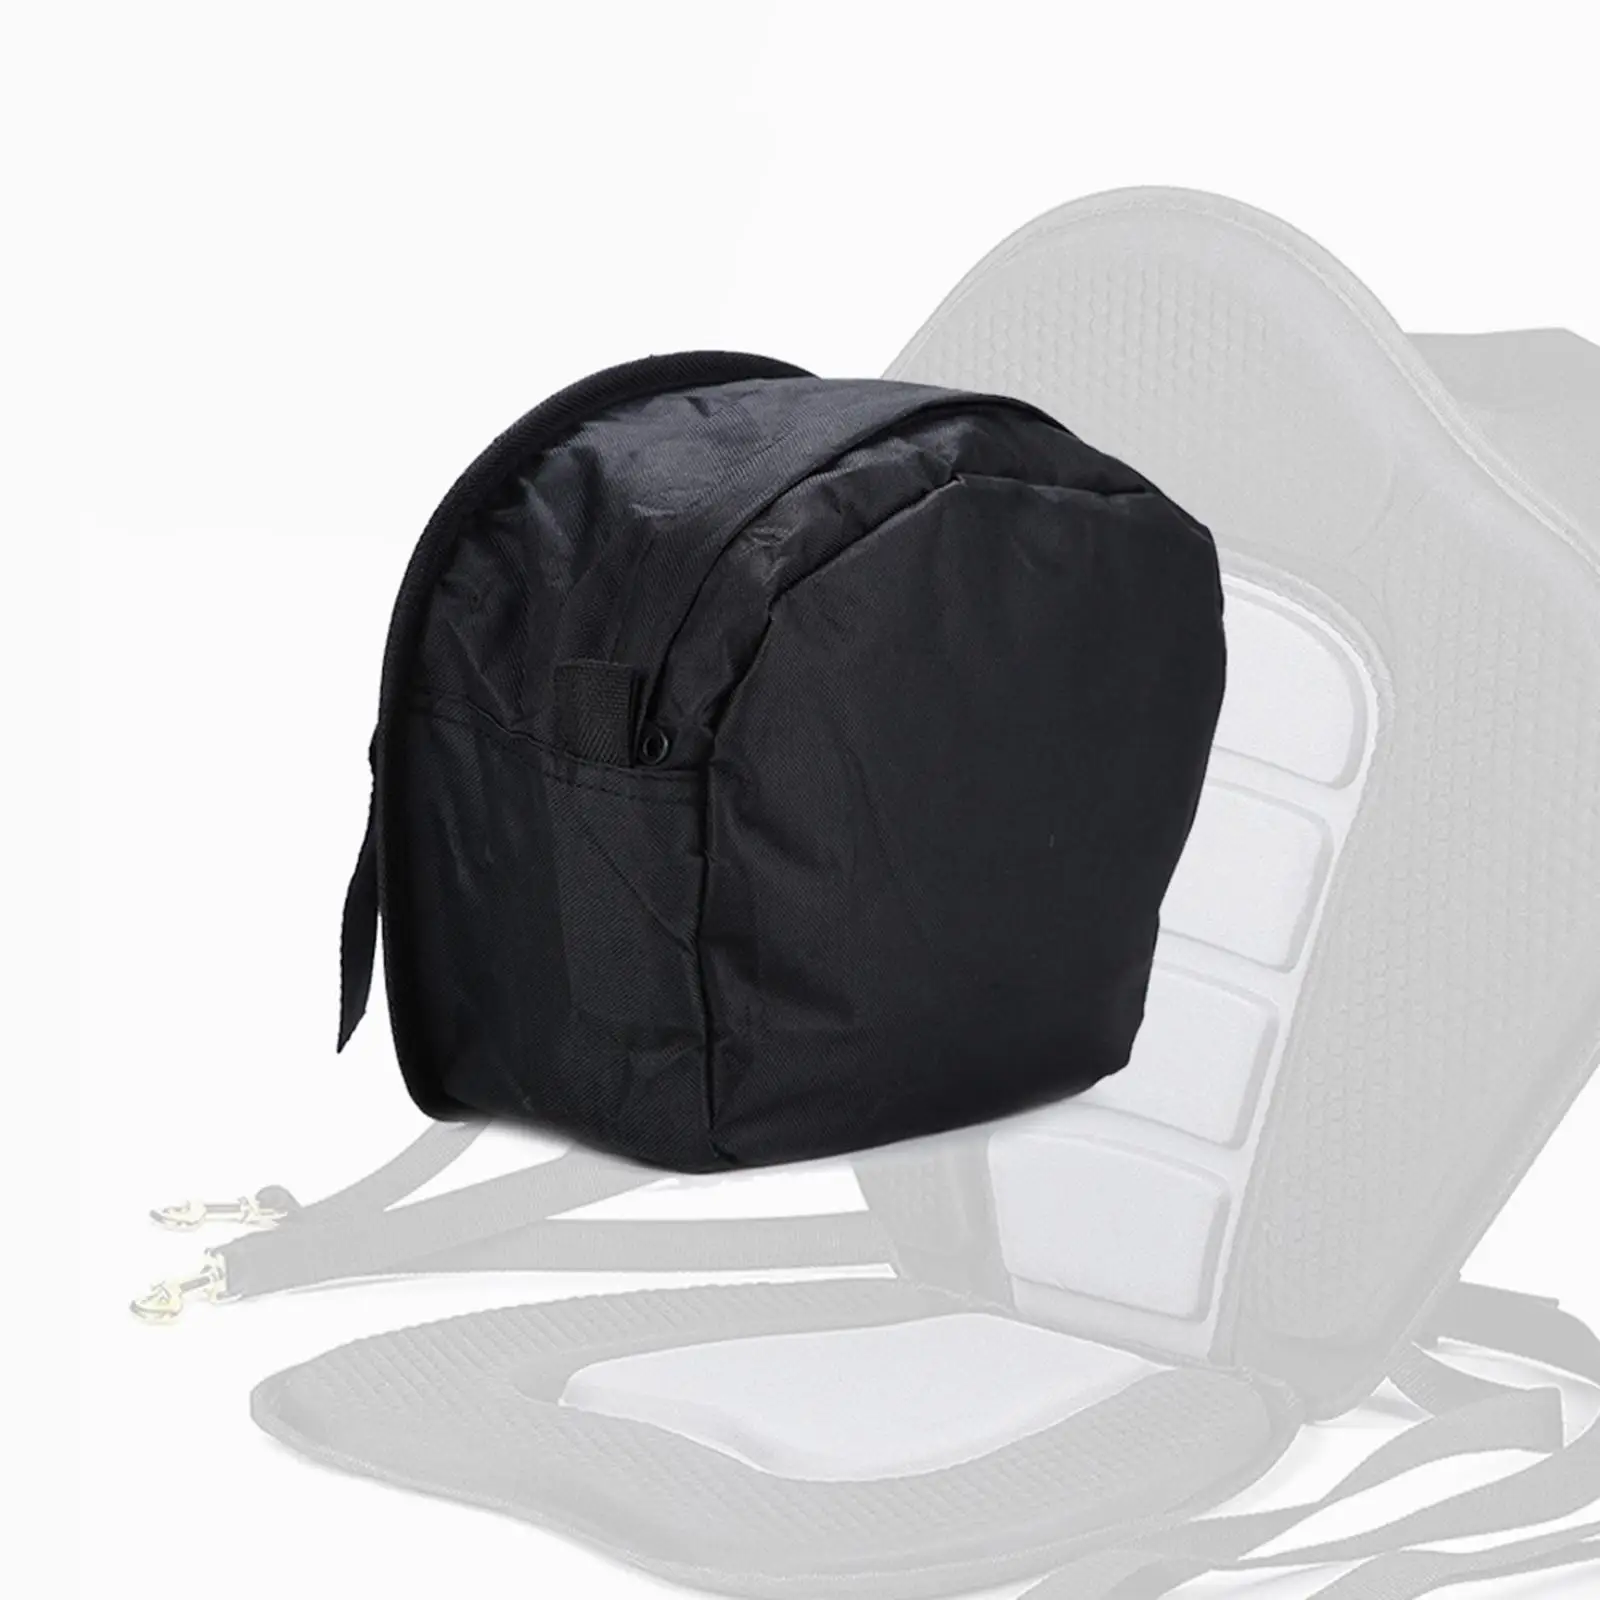 Kayak Seat Bag Storage Easy to Use Kayak Accessories Portable Pouch Organizer